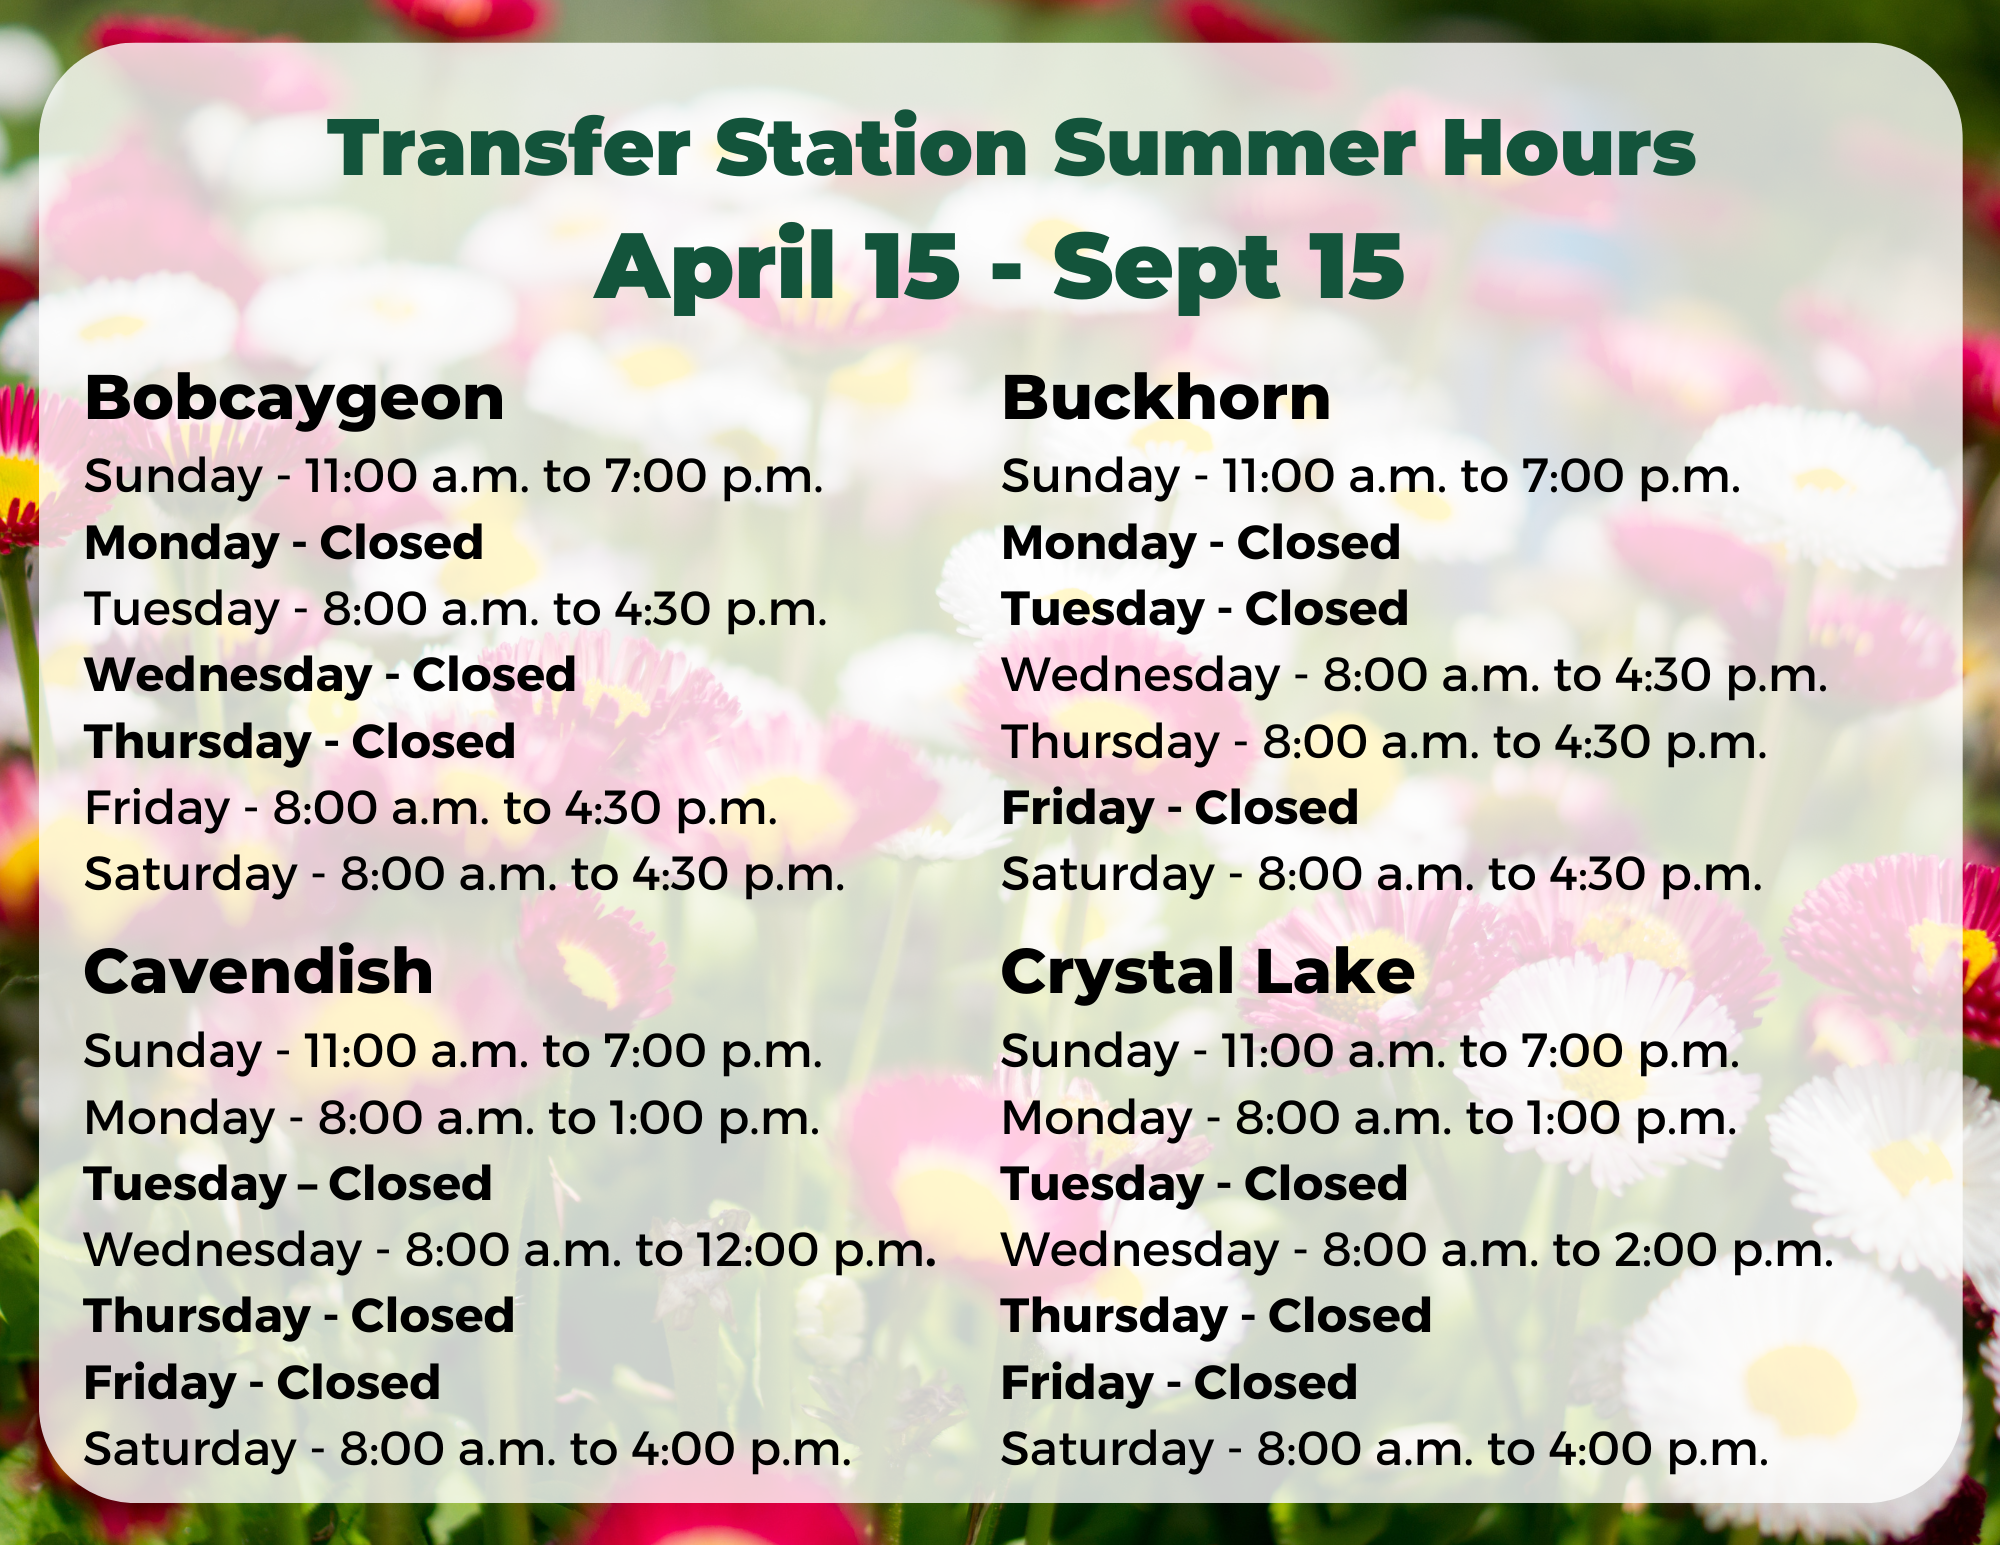 List of transfer station summer hours.